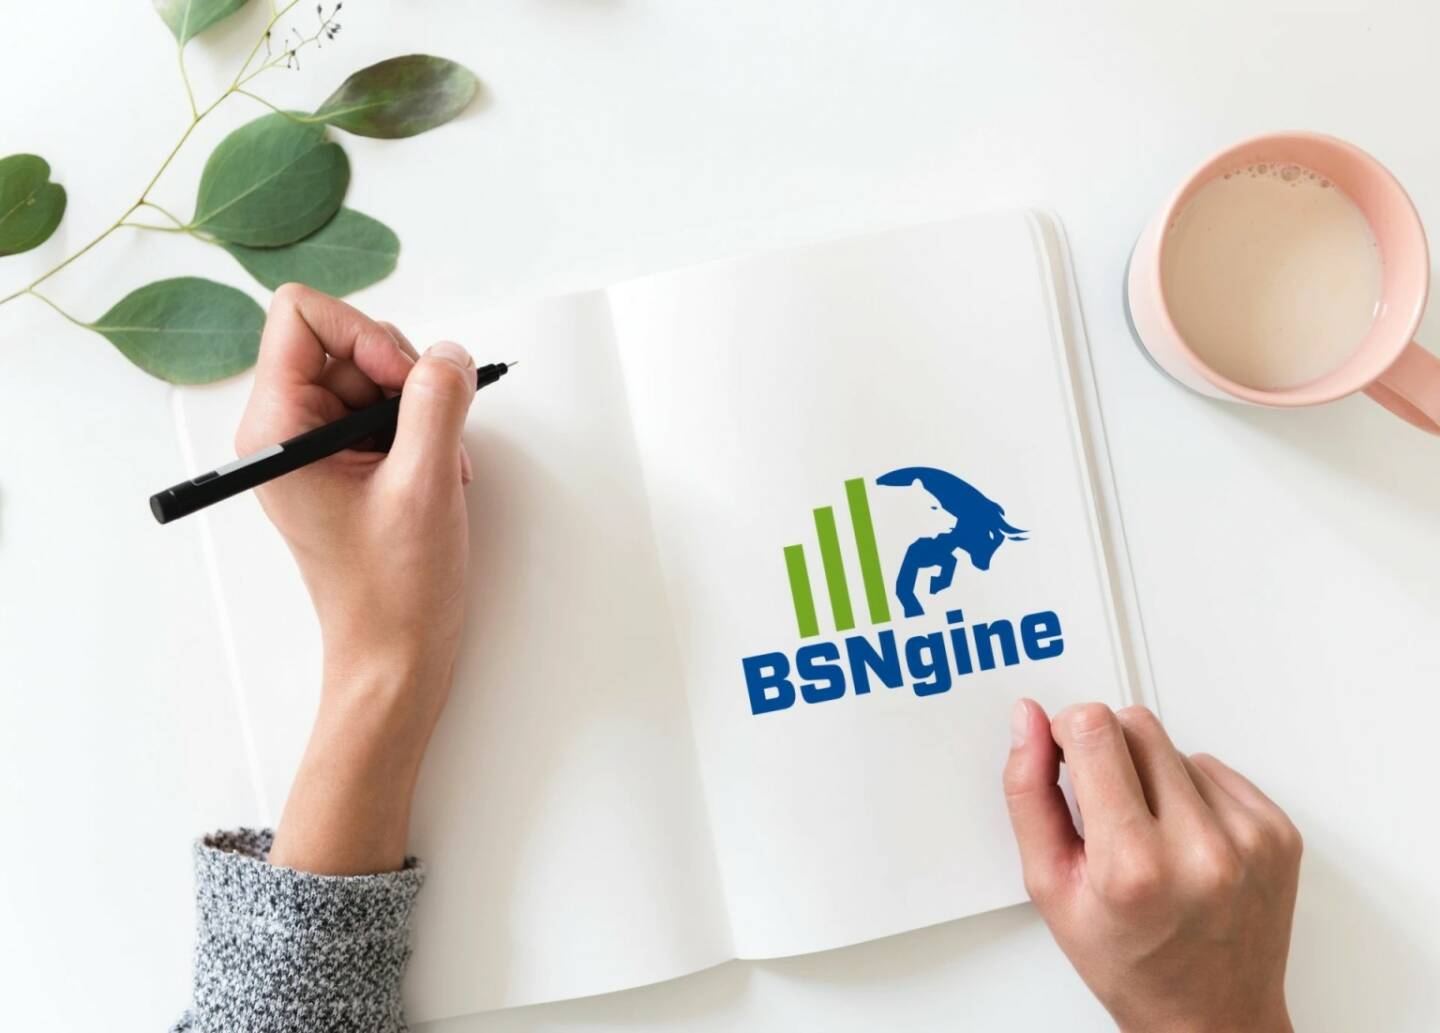 BSNgine, book, coffee, pencil